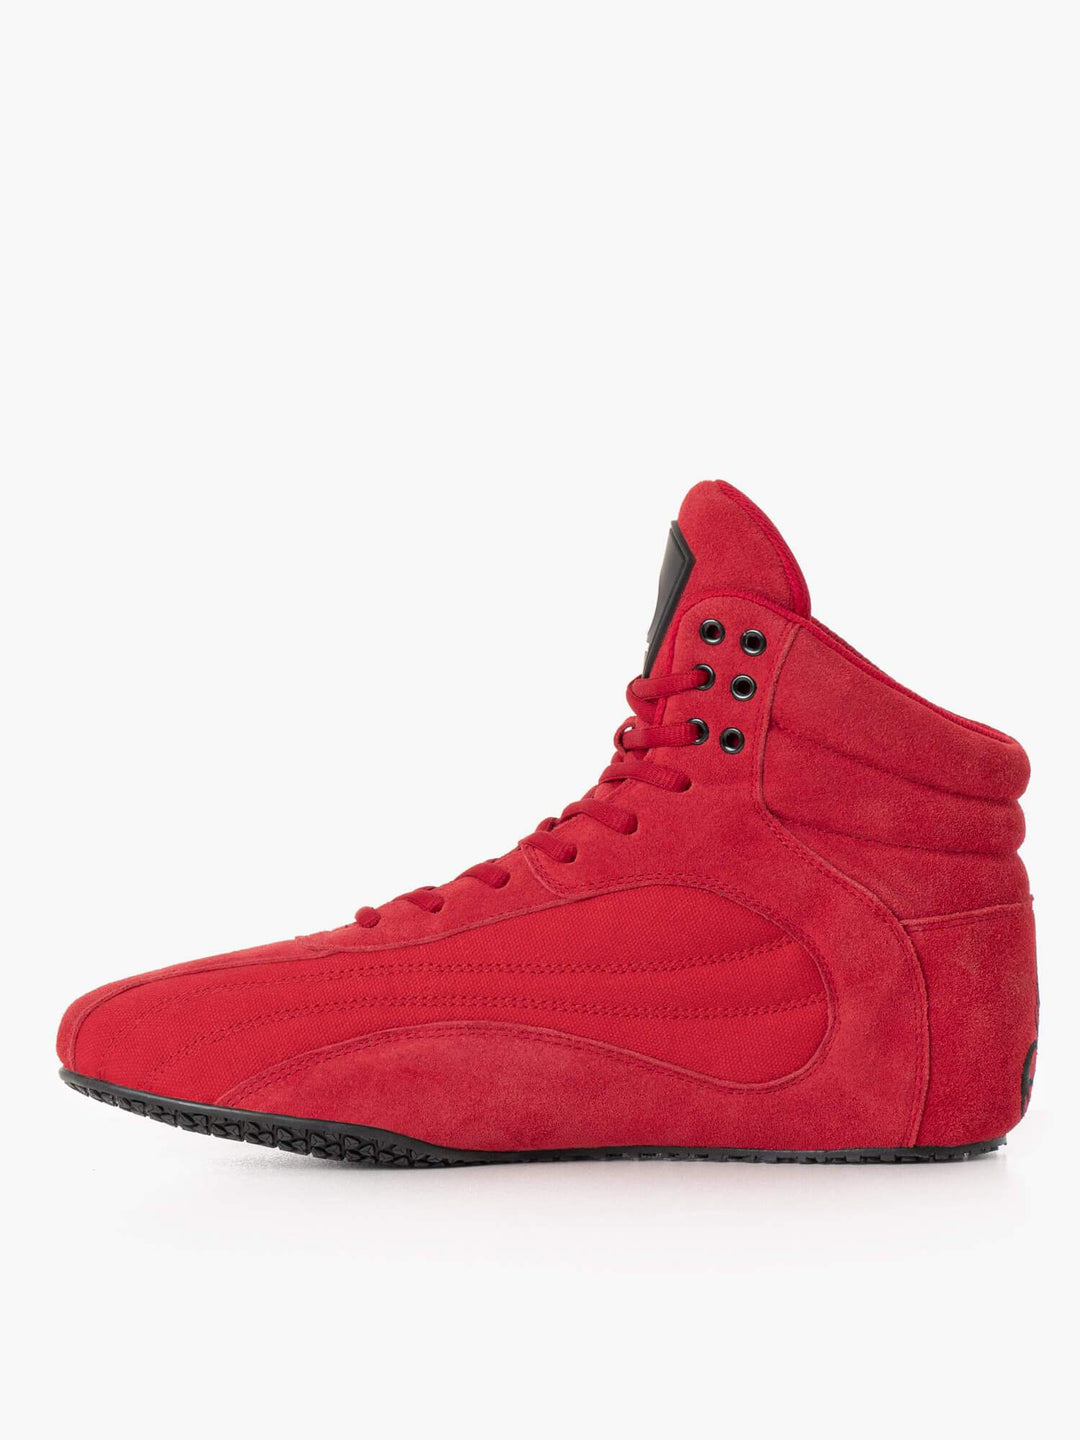 D-Mak Originals - Red Shoes Ryderwear 